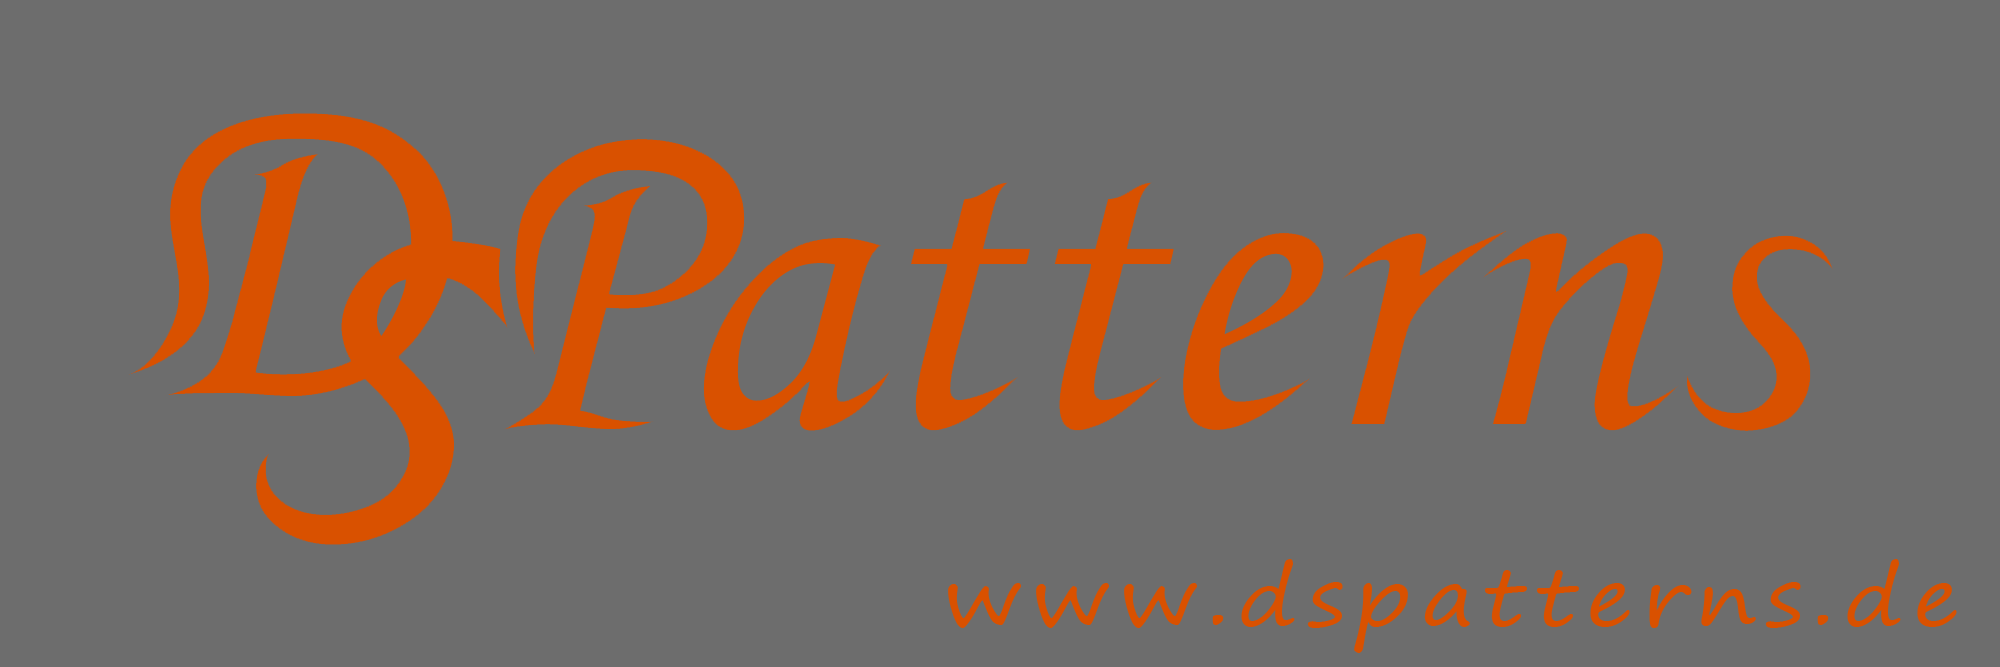 DS Patterns